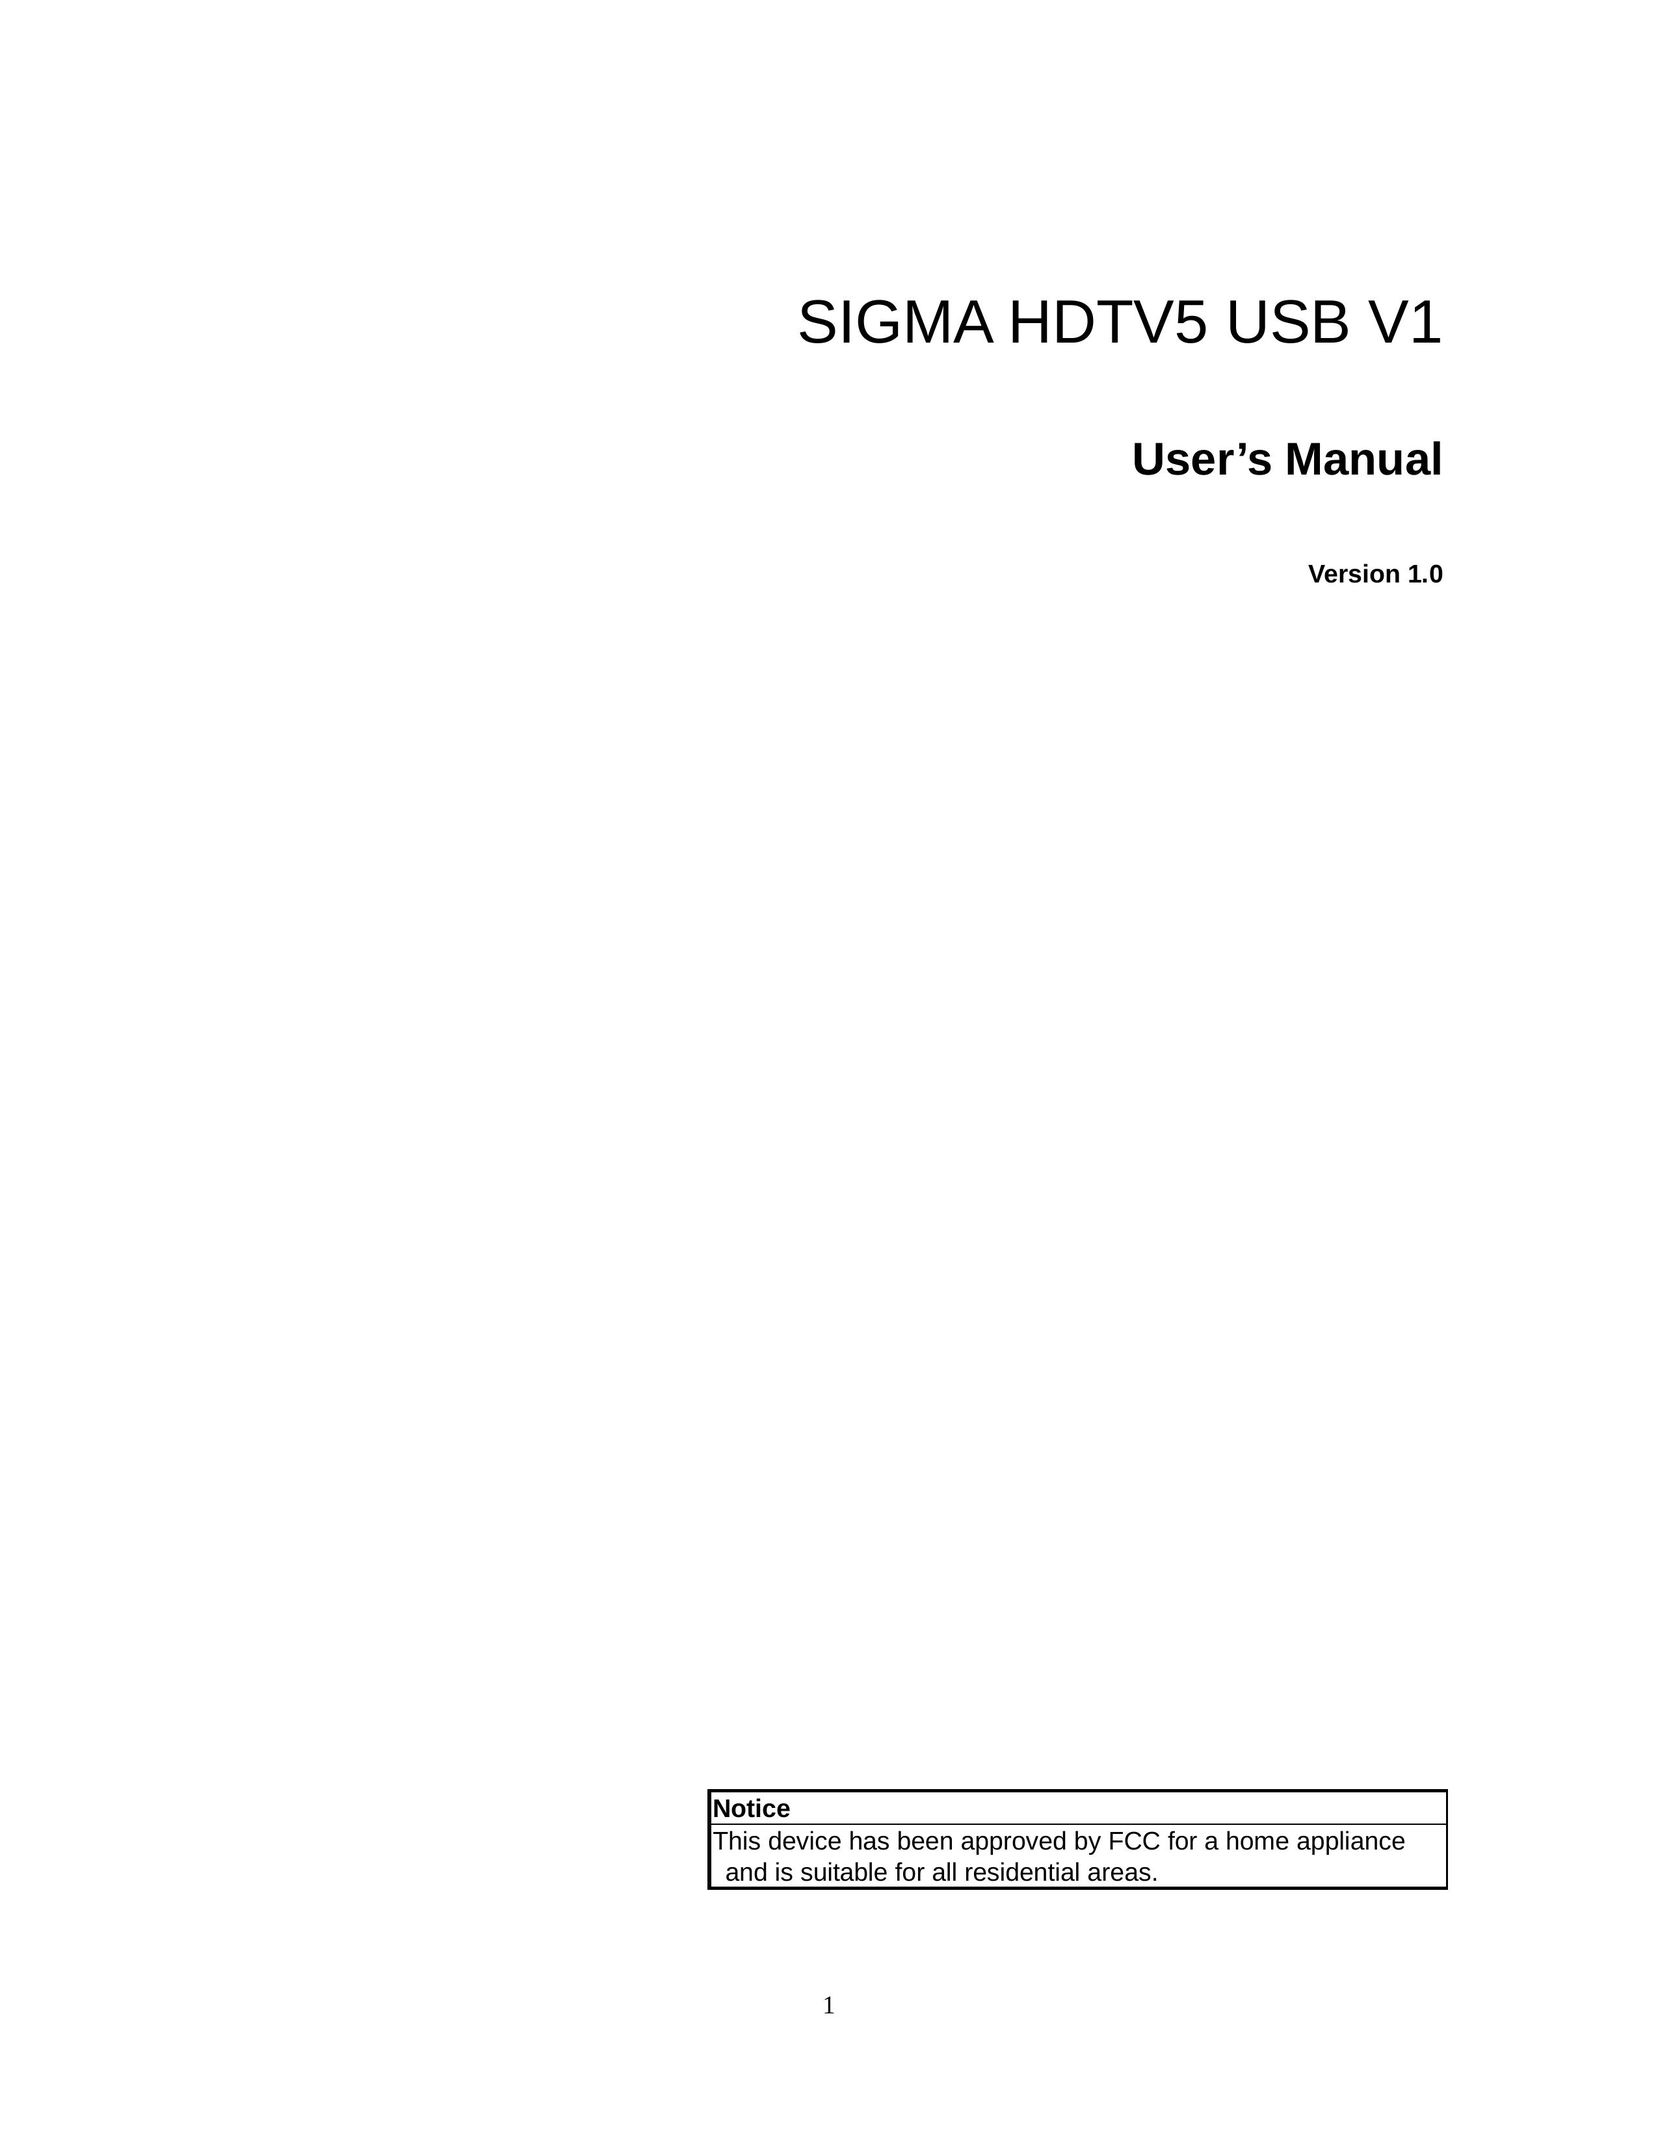 Sigma HDTV5 Network Card User Manual